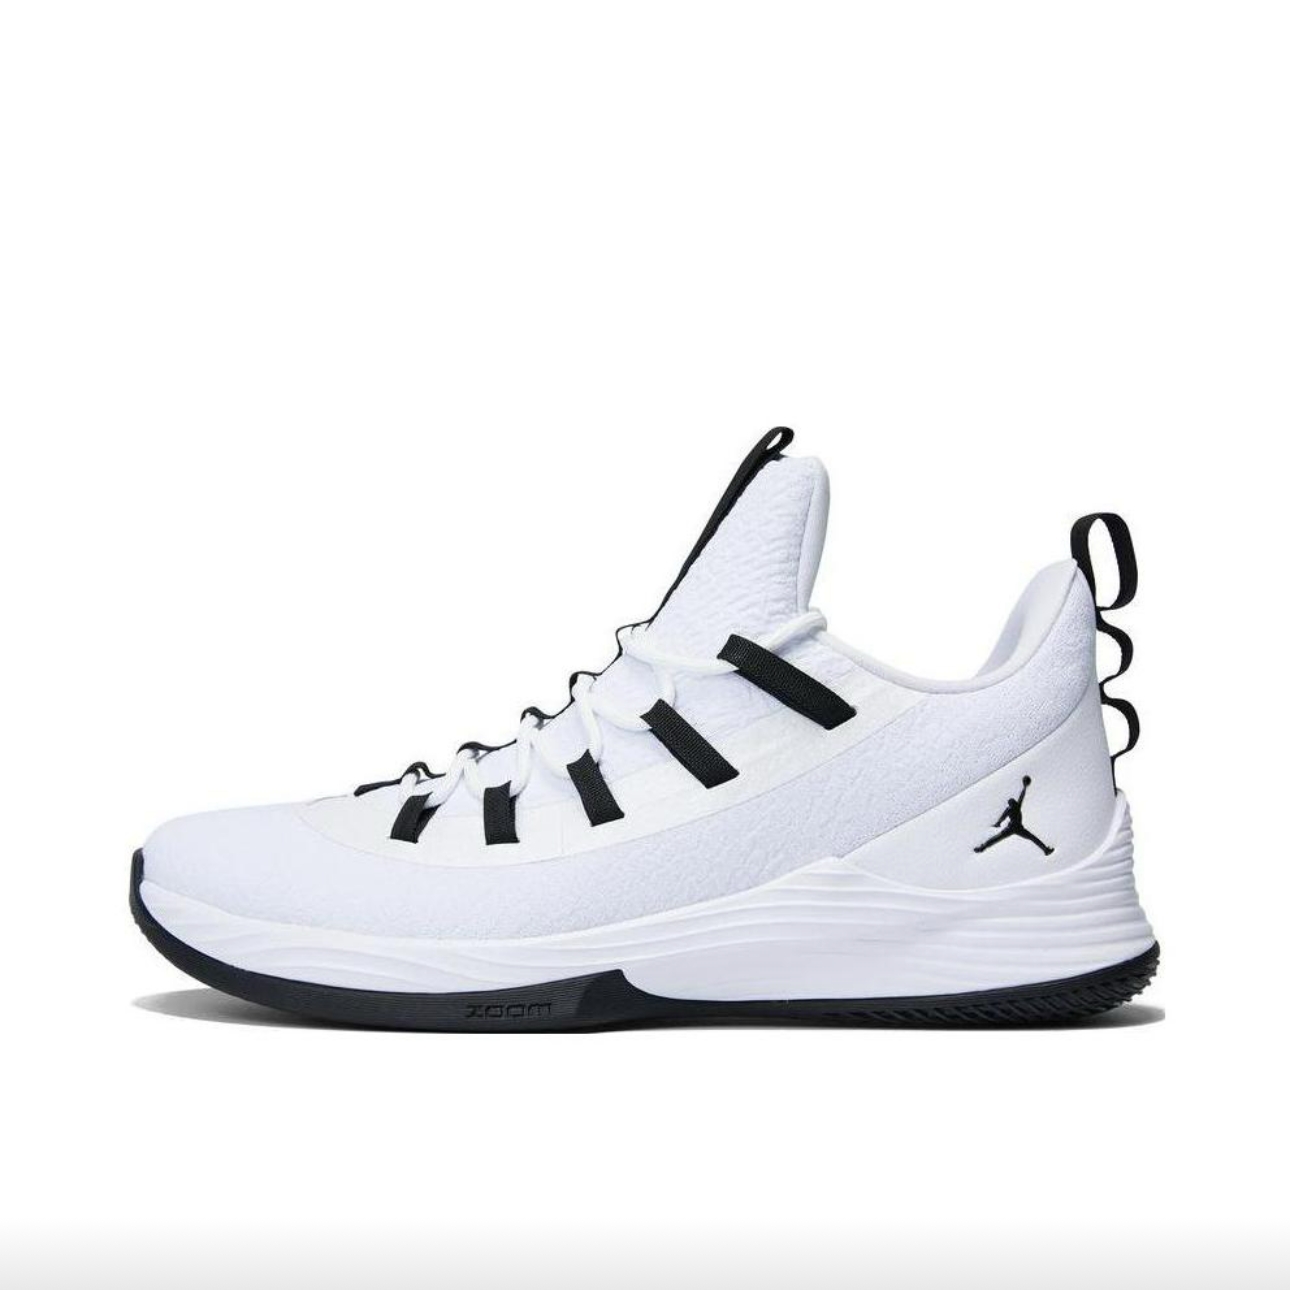 Jordan Ultra Fly 2 Low 男巴特勒实战篮球鞋 AH8110-100-010-114 运动鞋new 运动休闲鞋 原图主图